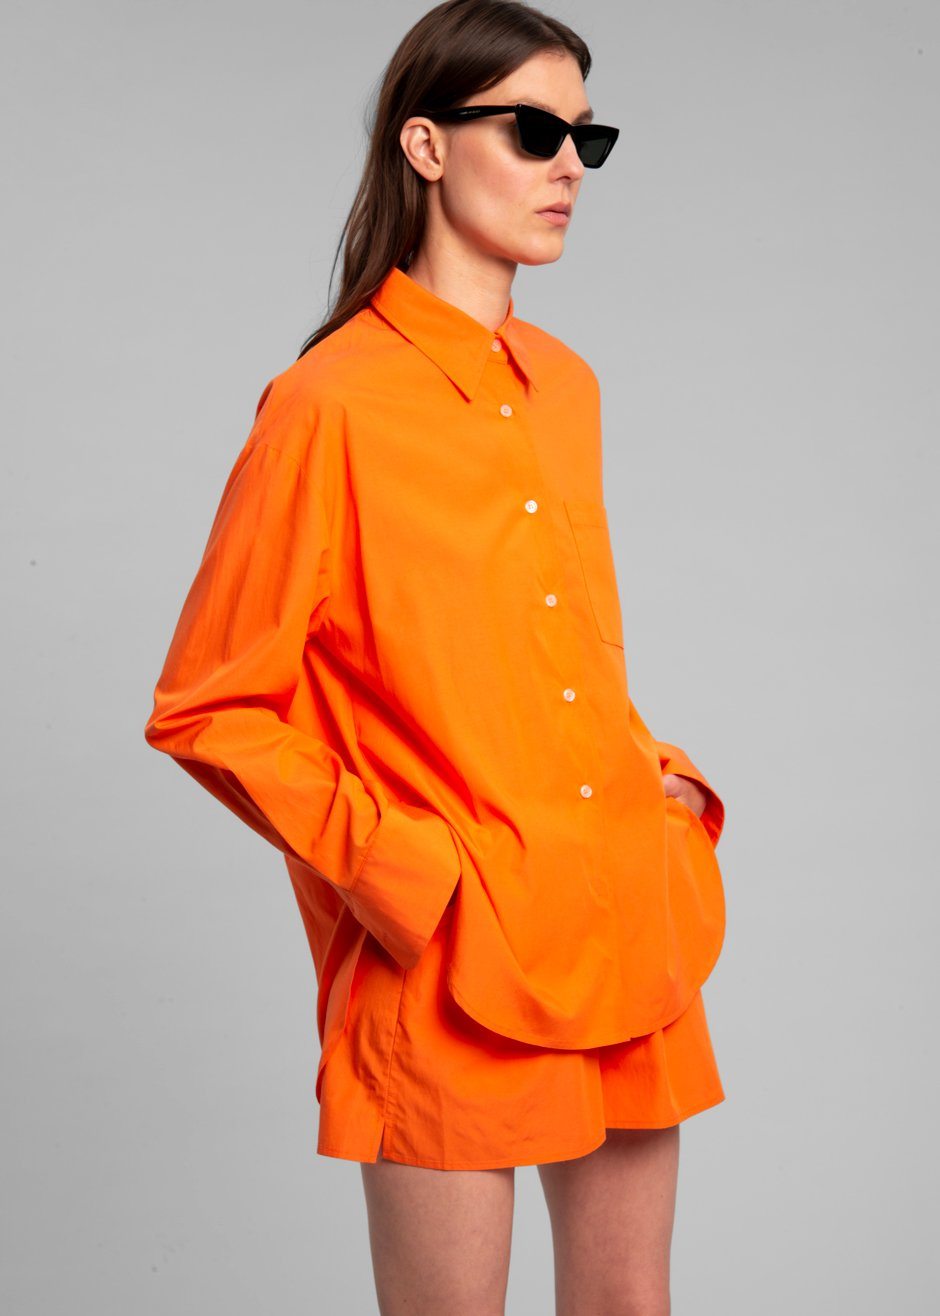 Lui Cotton Shirt - Tangerine - 5